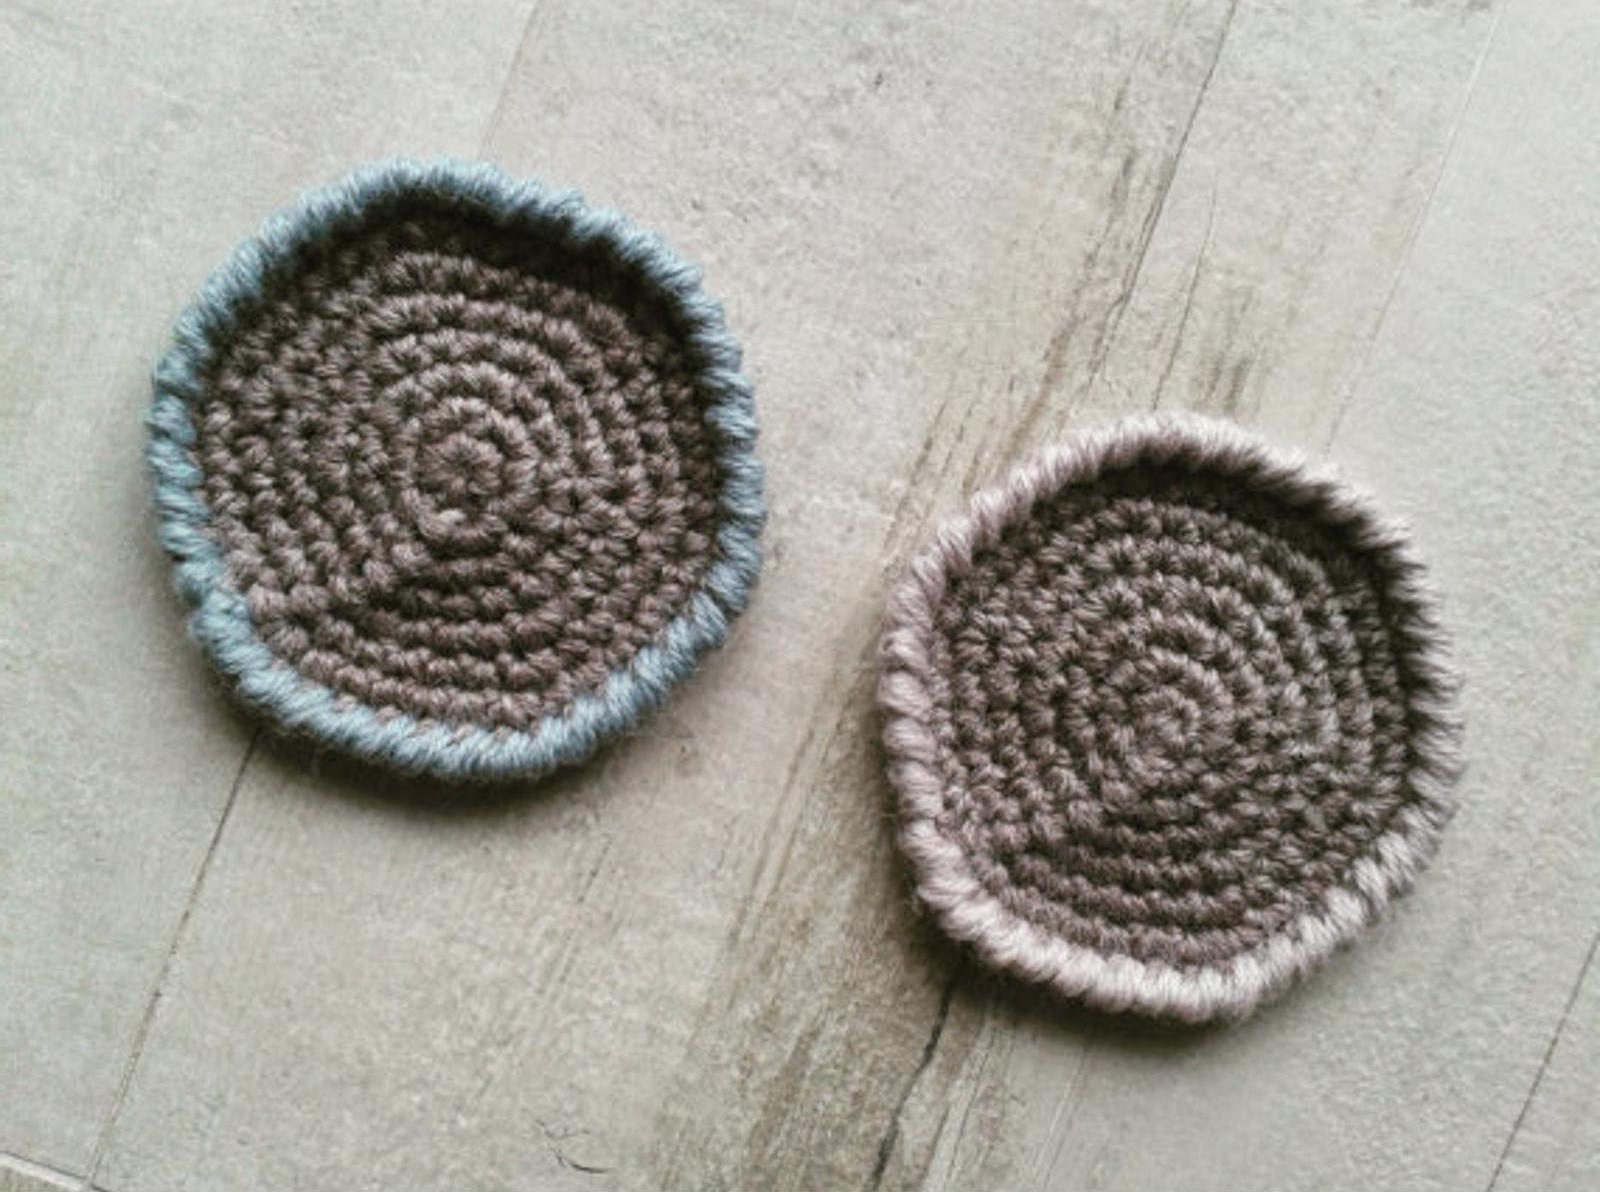 Modern Crochet Coasters